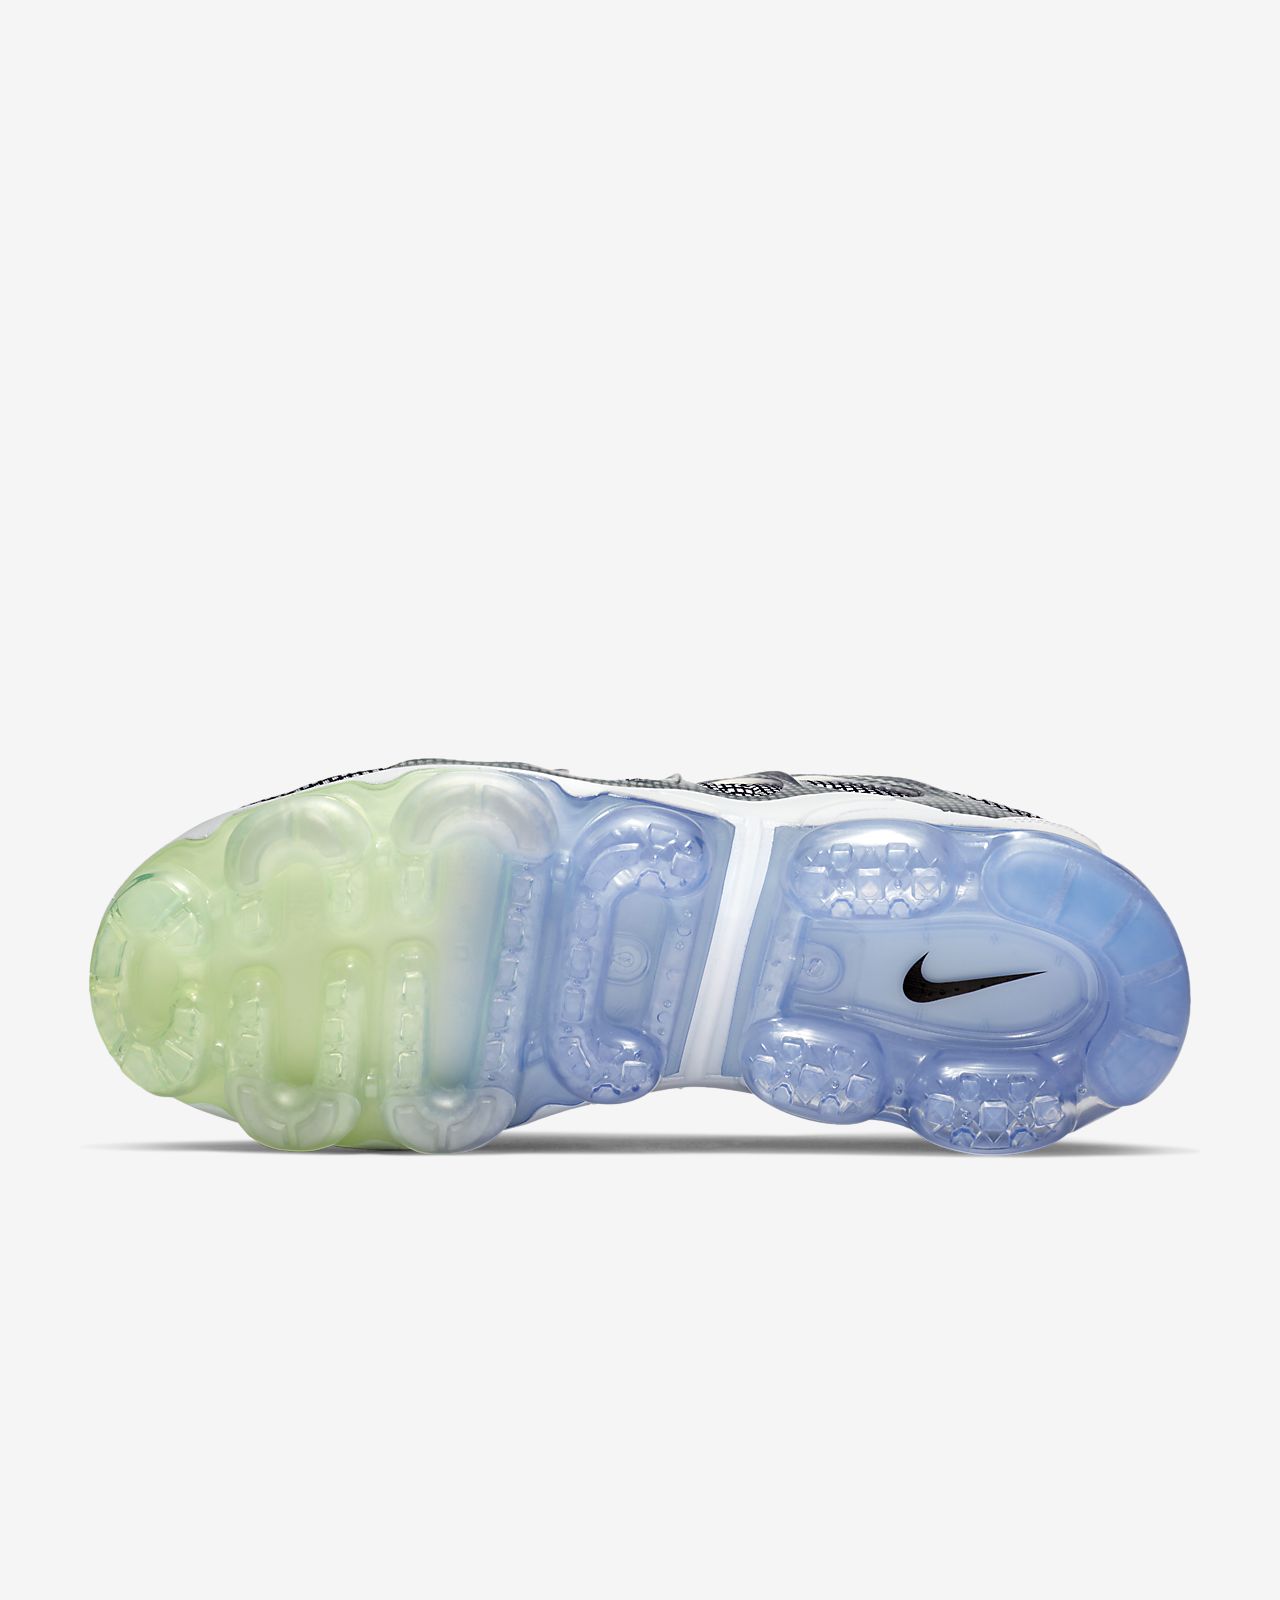 Nike Vapormax Plus Blue Pink Green CW7014 100 Sneaker